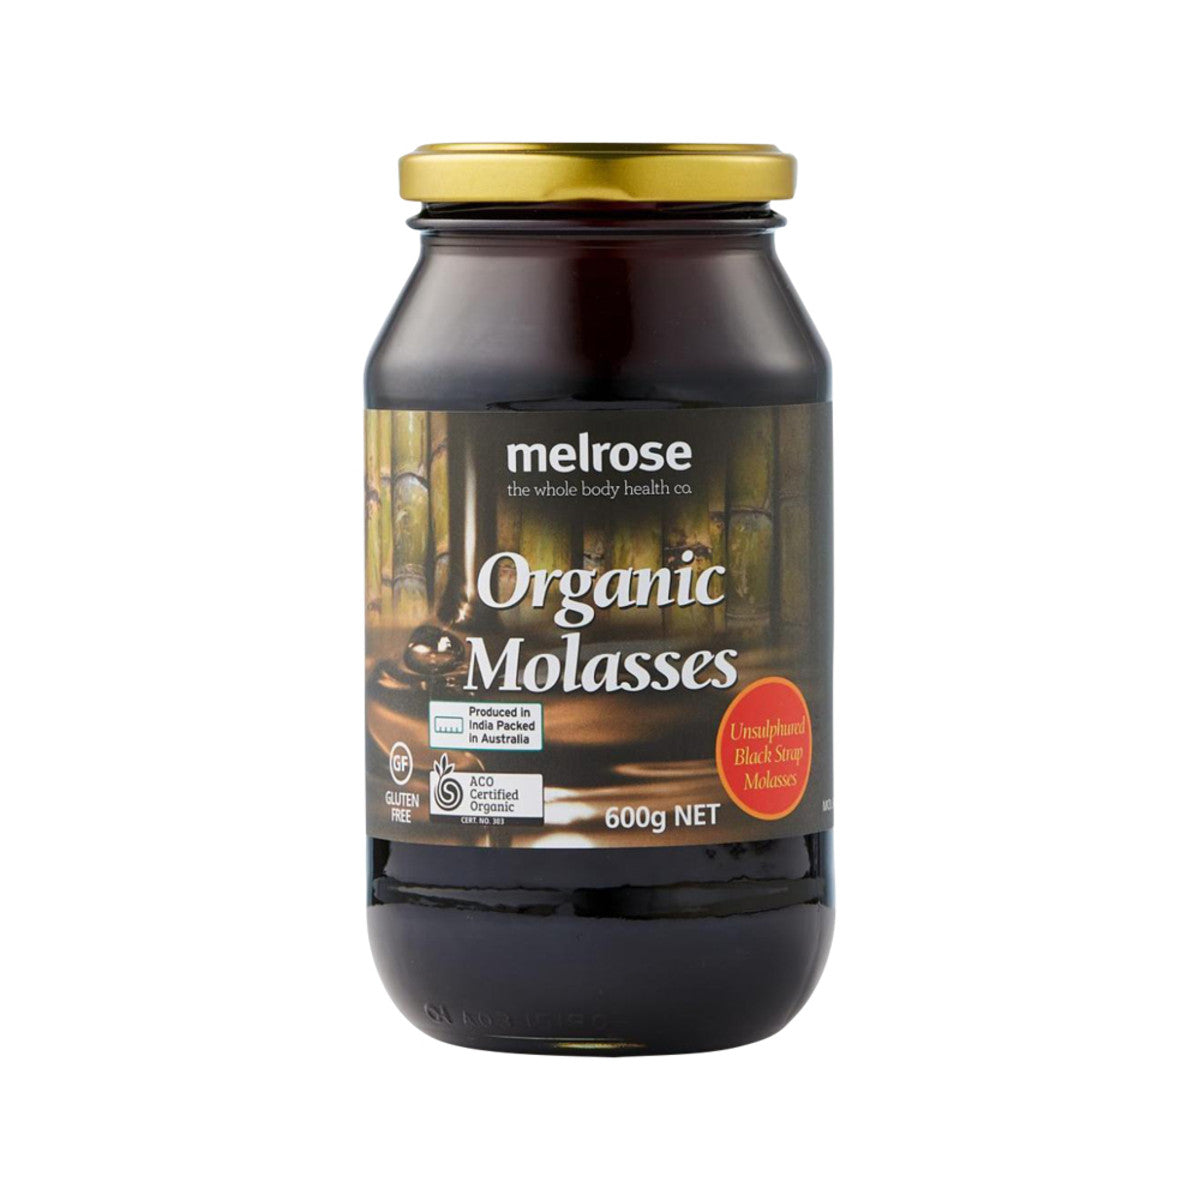 Melrose Organic Molasses 600g, Certified Organic